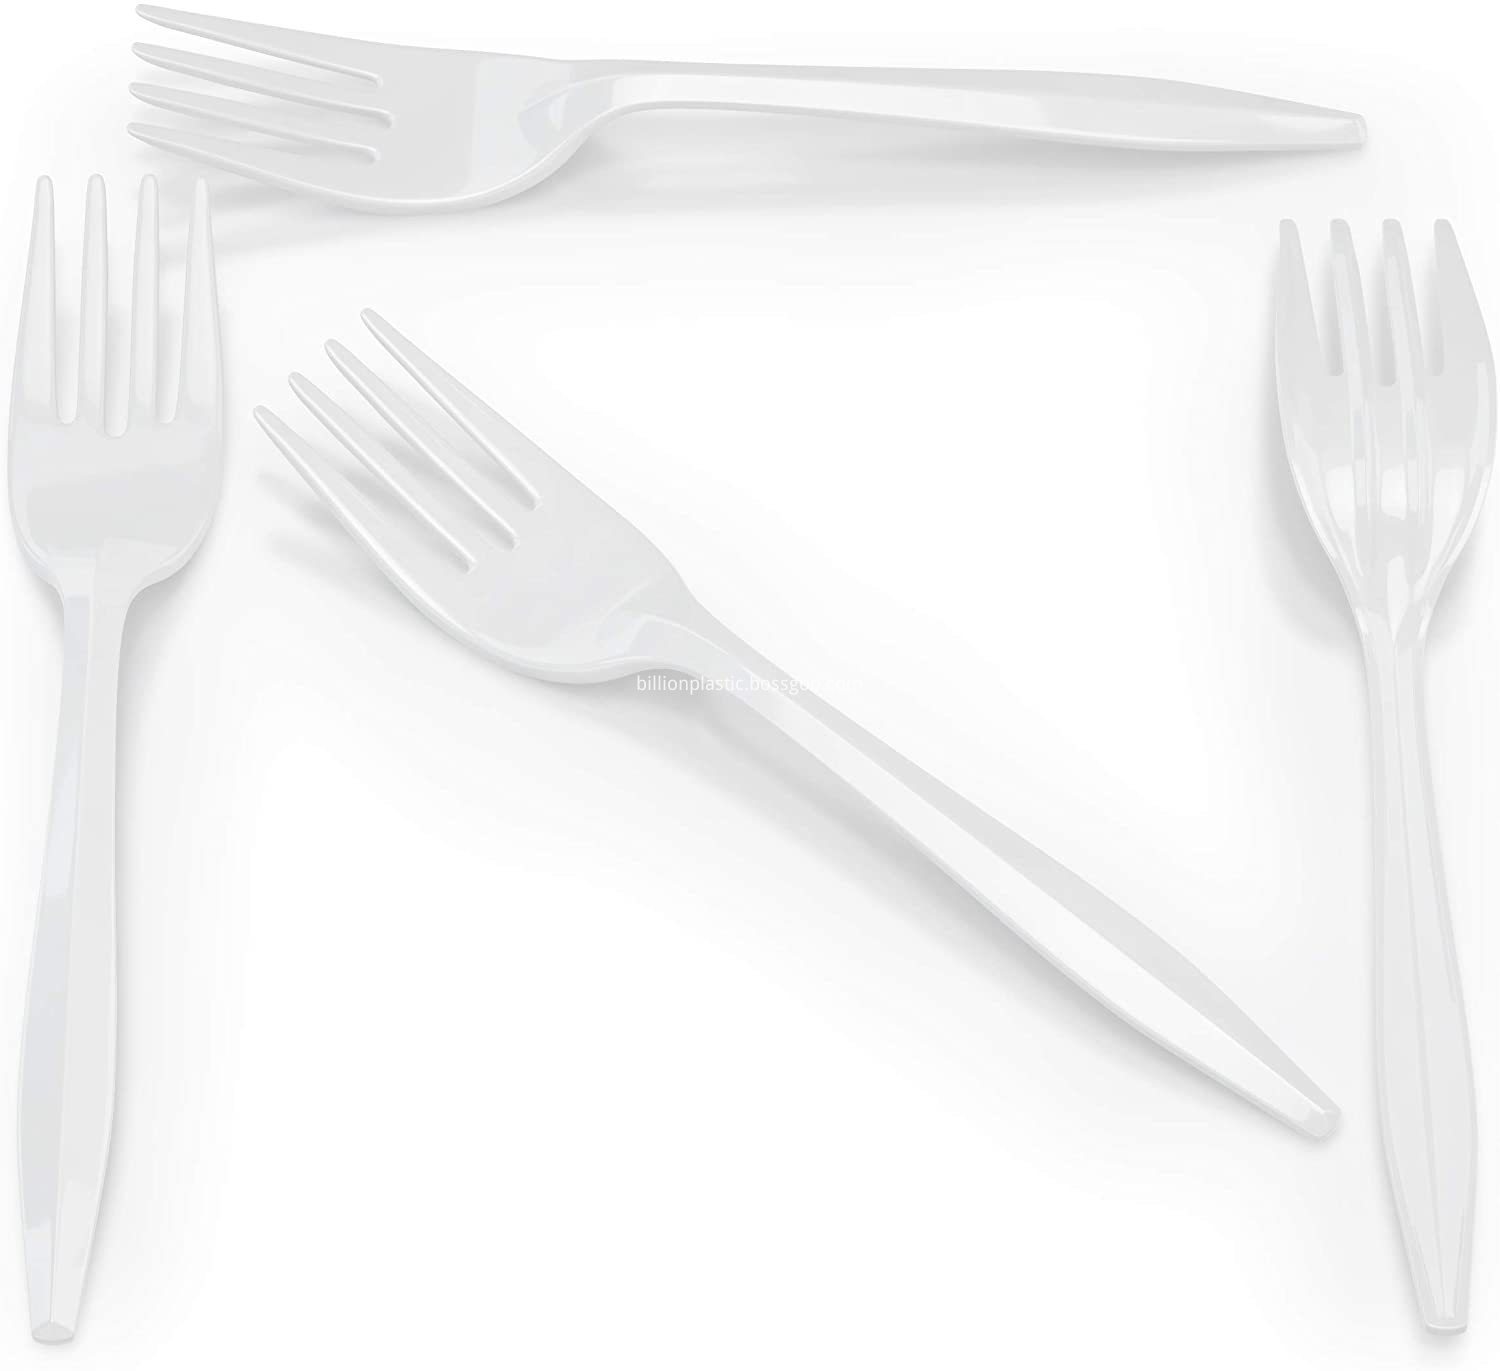 walmart plastic forks